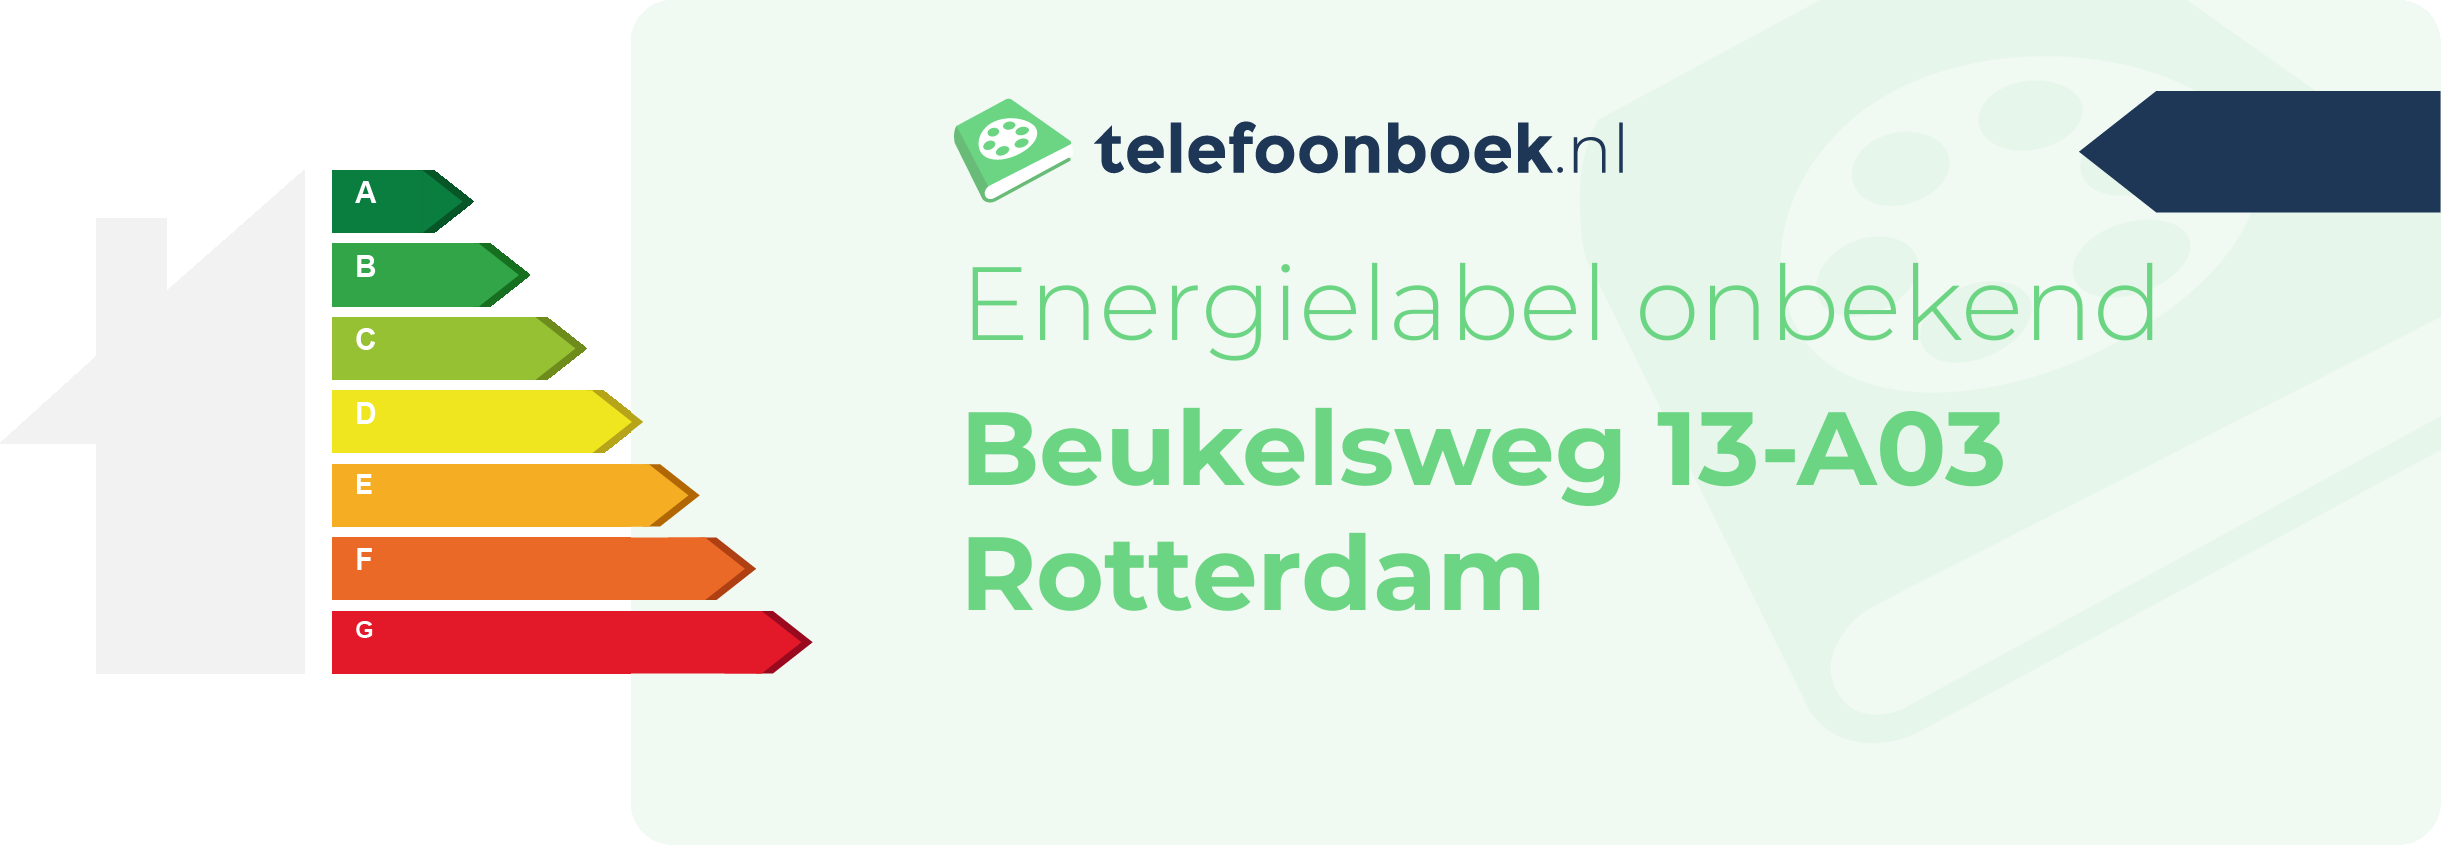 Energielabel Beukelsweg 13-A03 Rotterdam